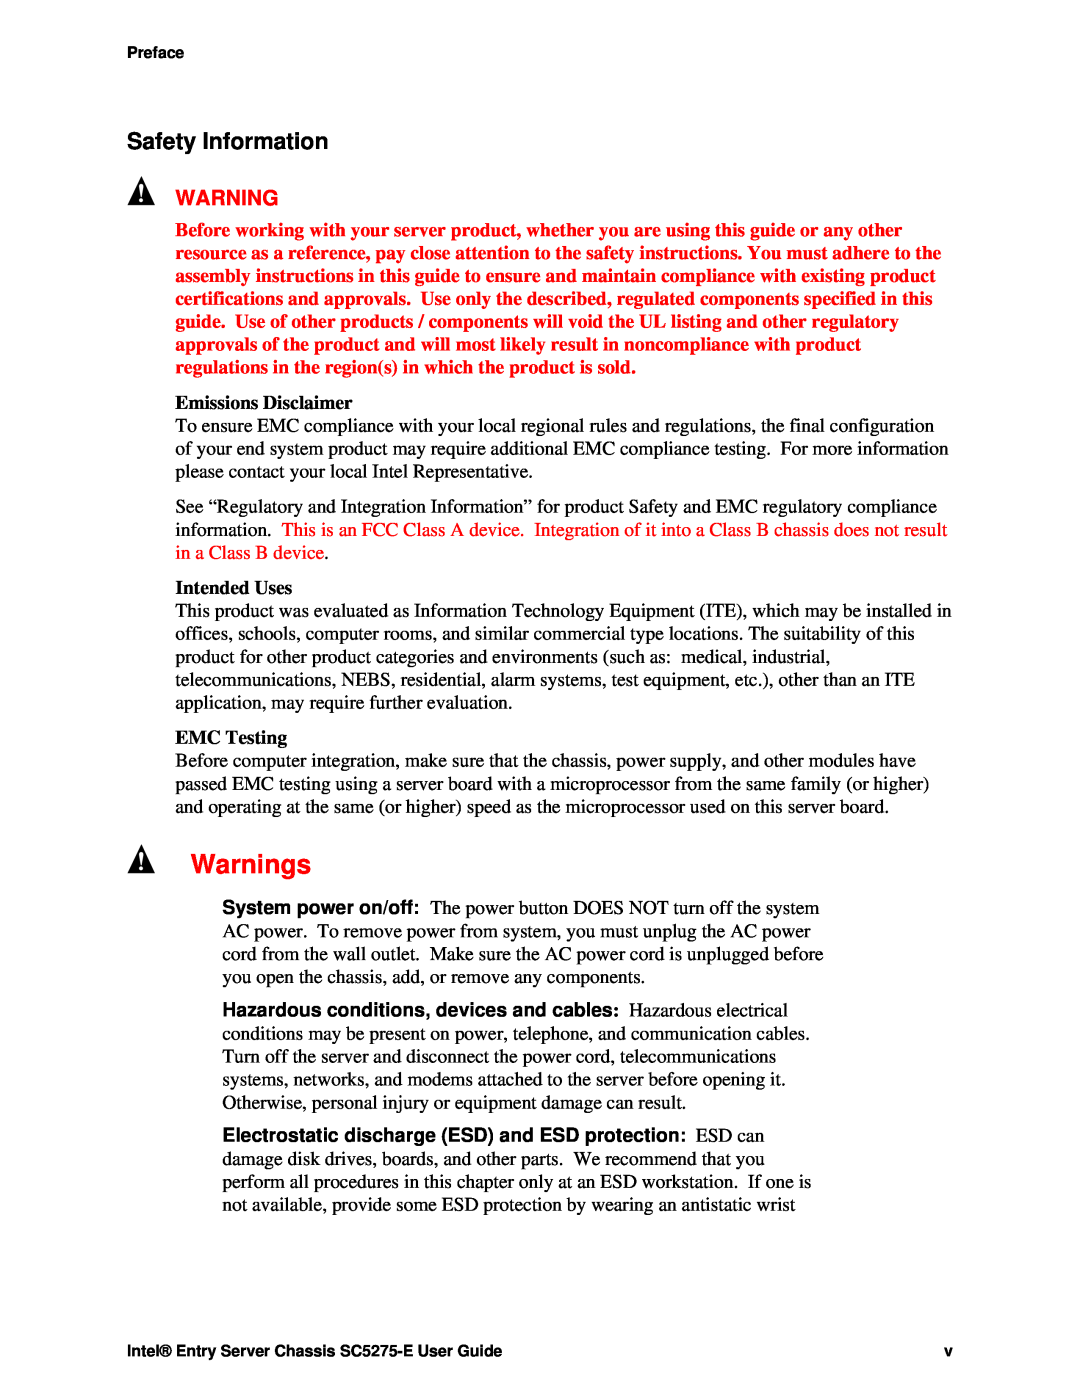 Intel C50277-001, SC5275-E manual Safety Information, Warnings 